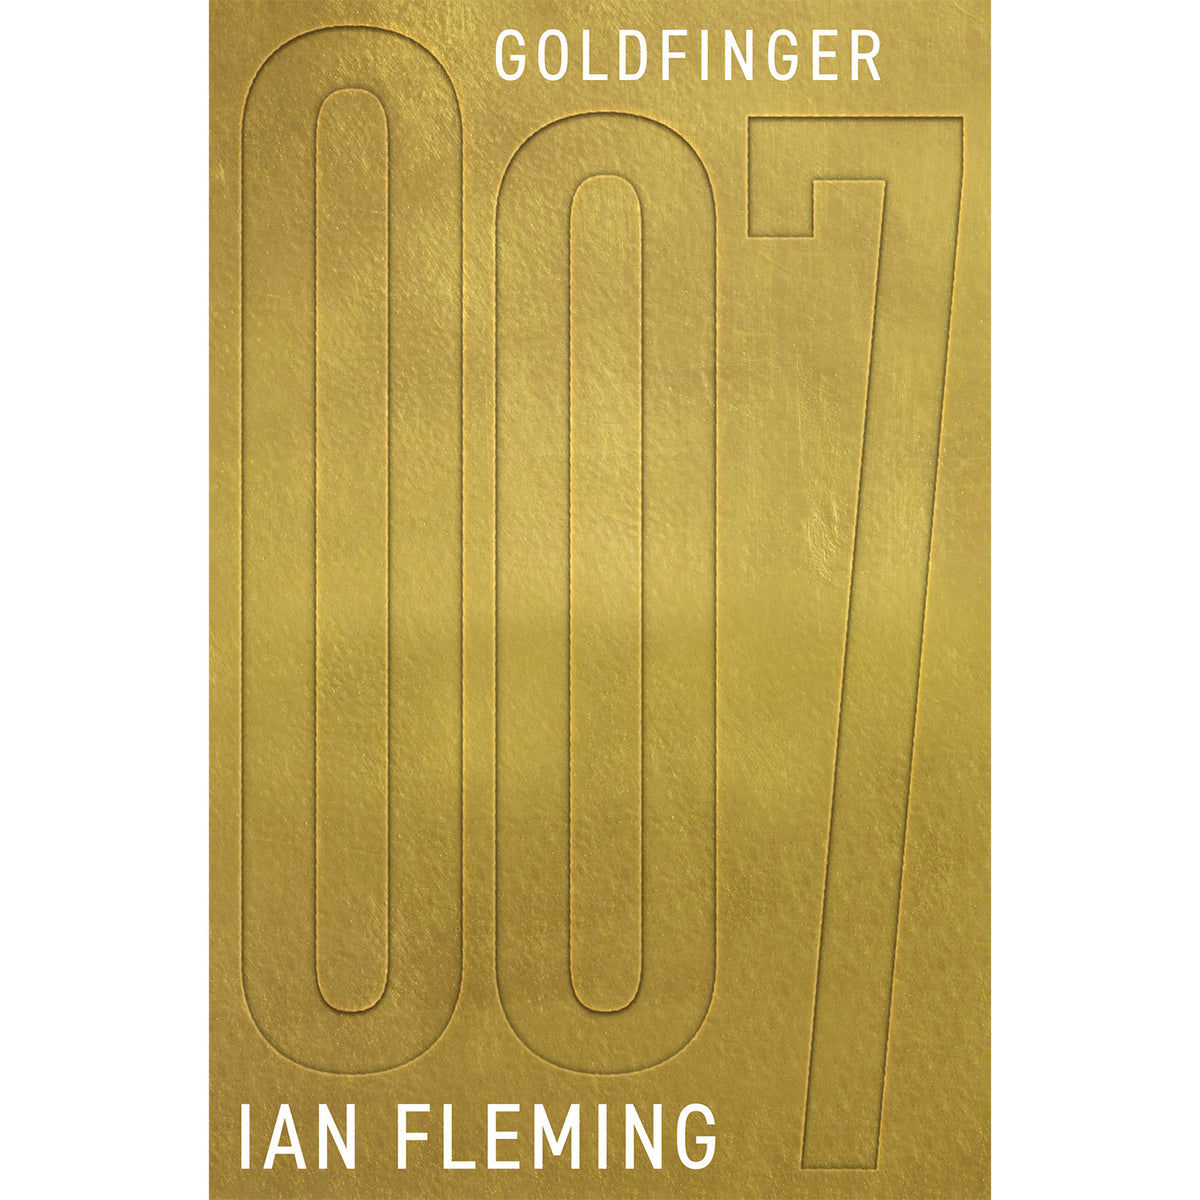 James Bond Goldfinger Book - By Ian Fleming